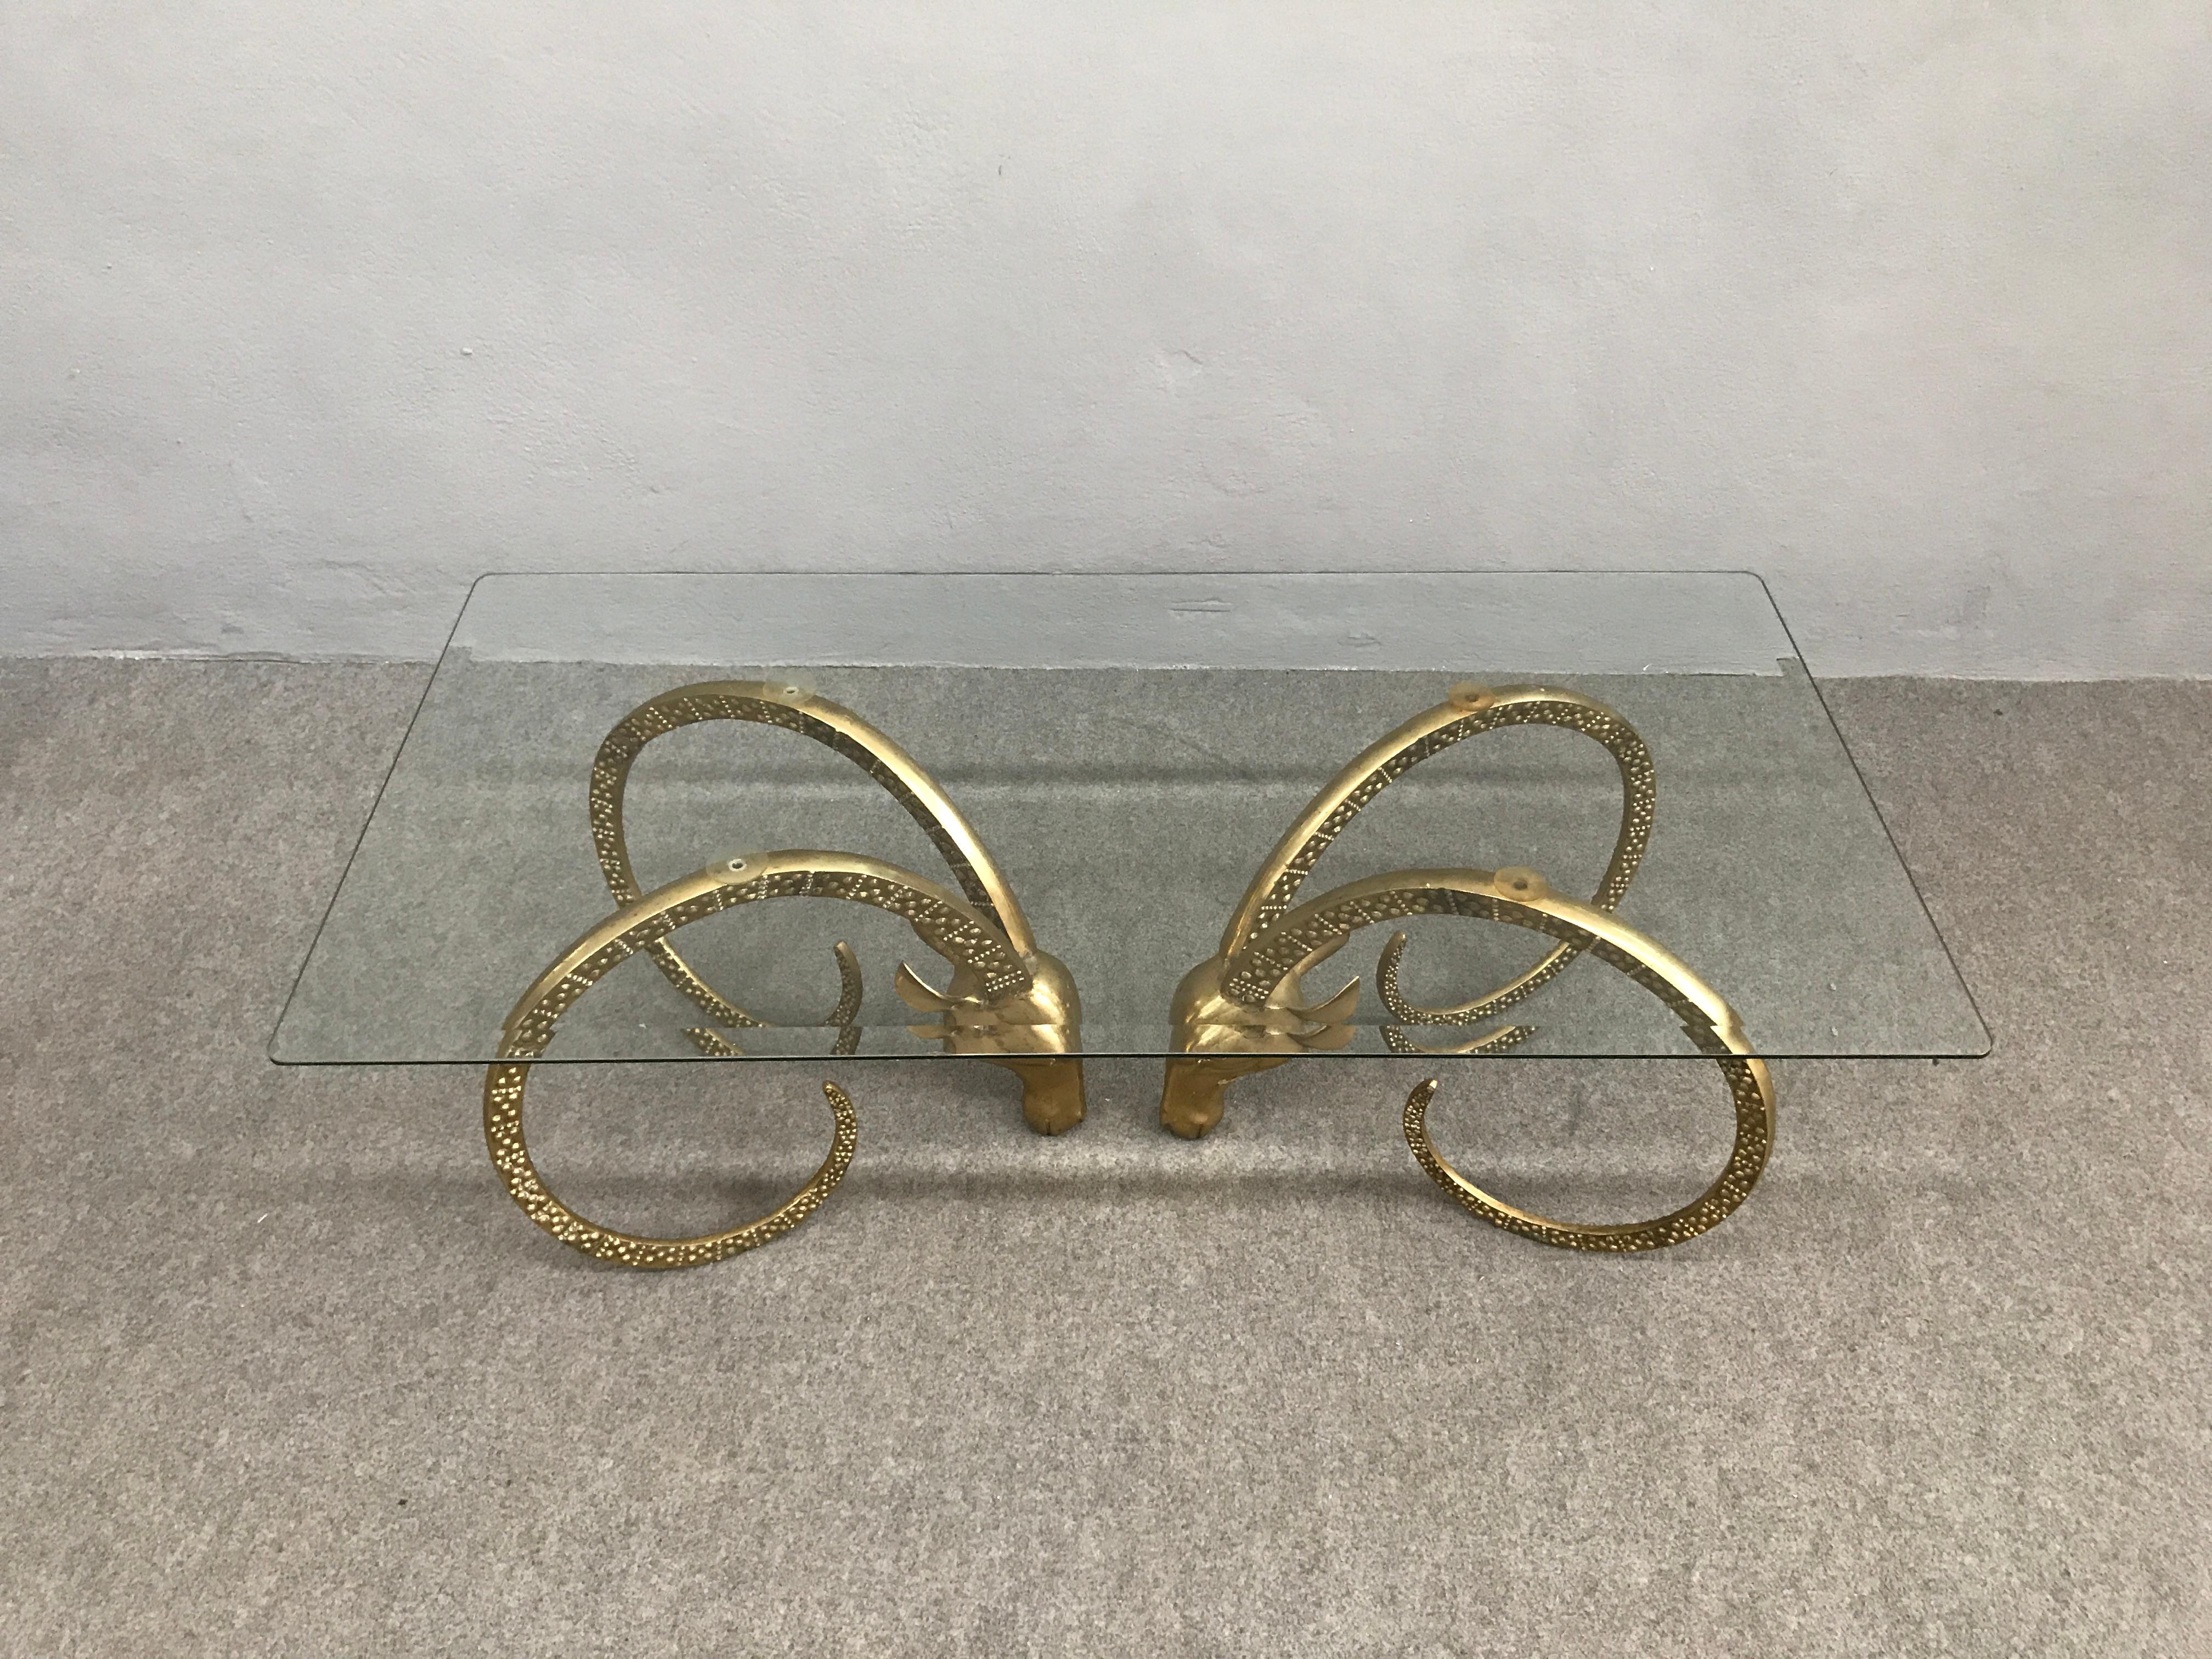 Stunning brass ram's head or ibex attributed to Alain Chervet.
Original glass top.